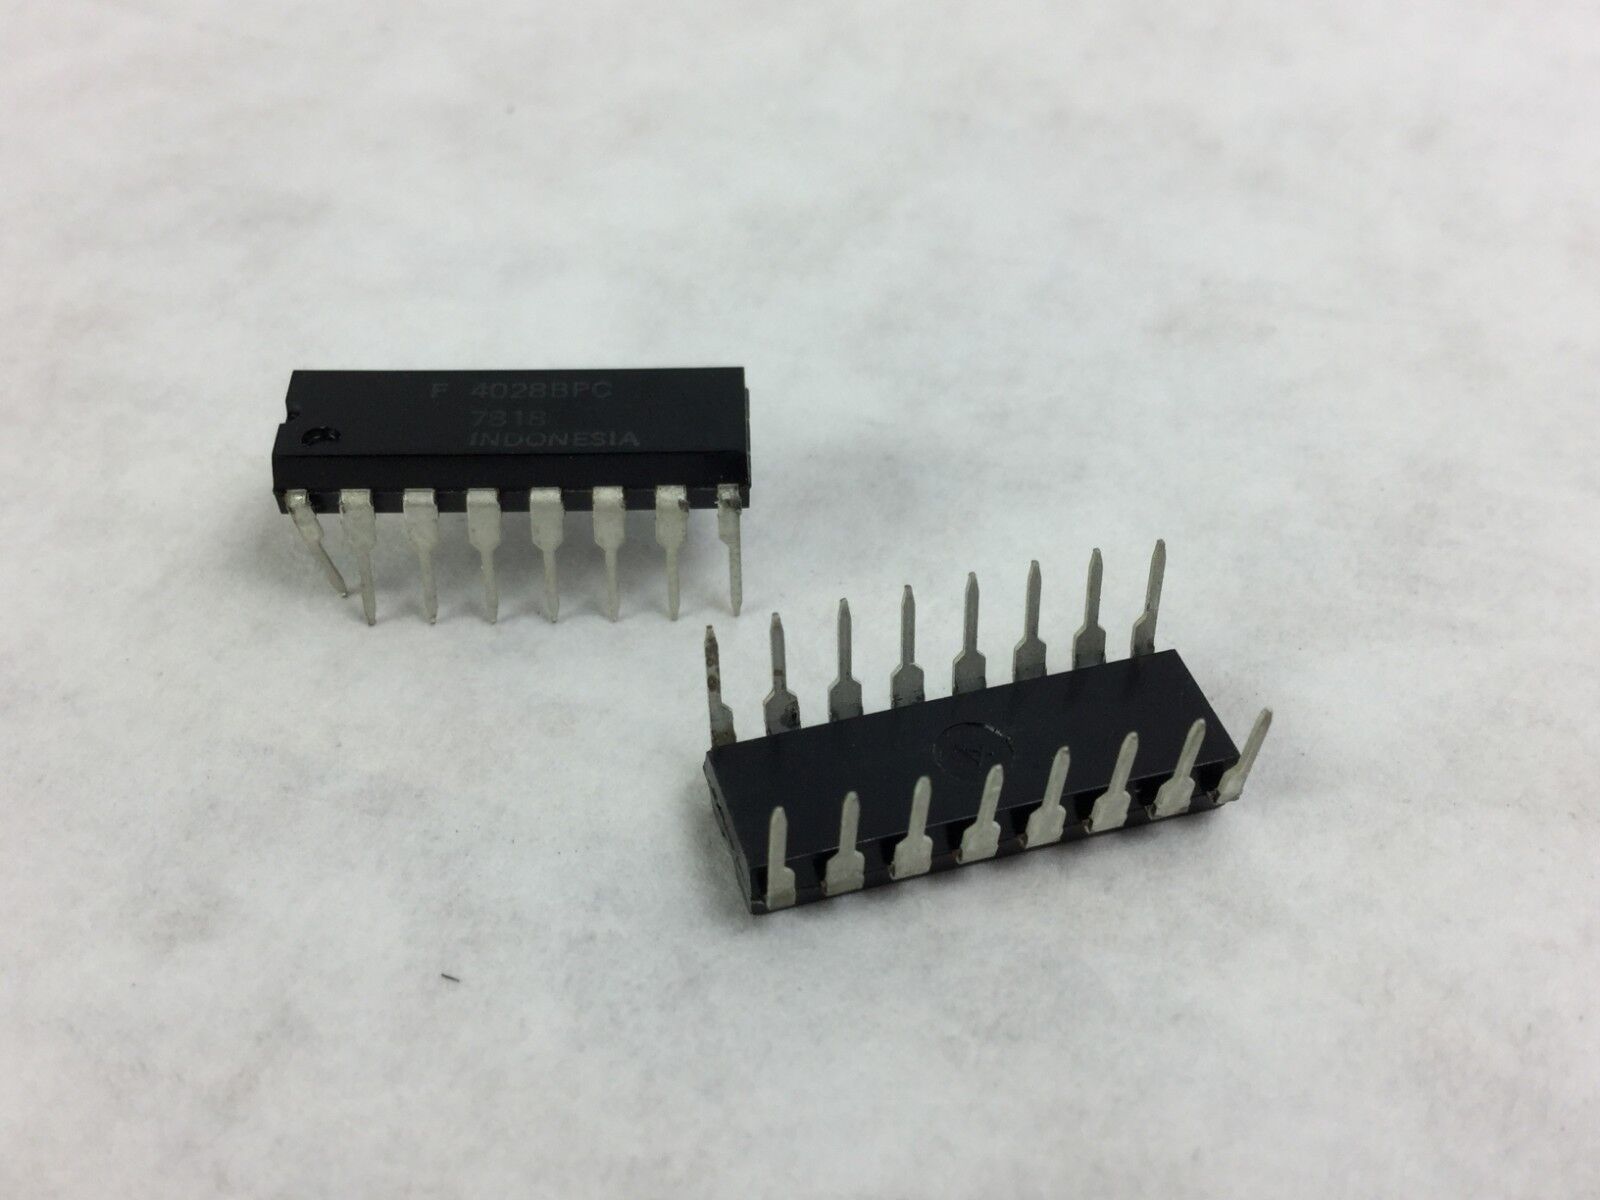 Fairchild 4028BPC Integrated Circuit   16 Pin  Lot of 23